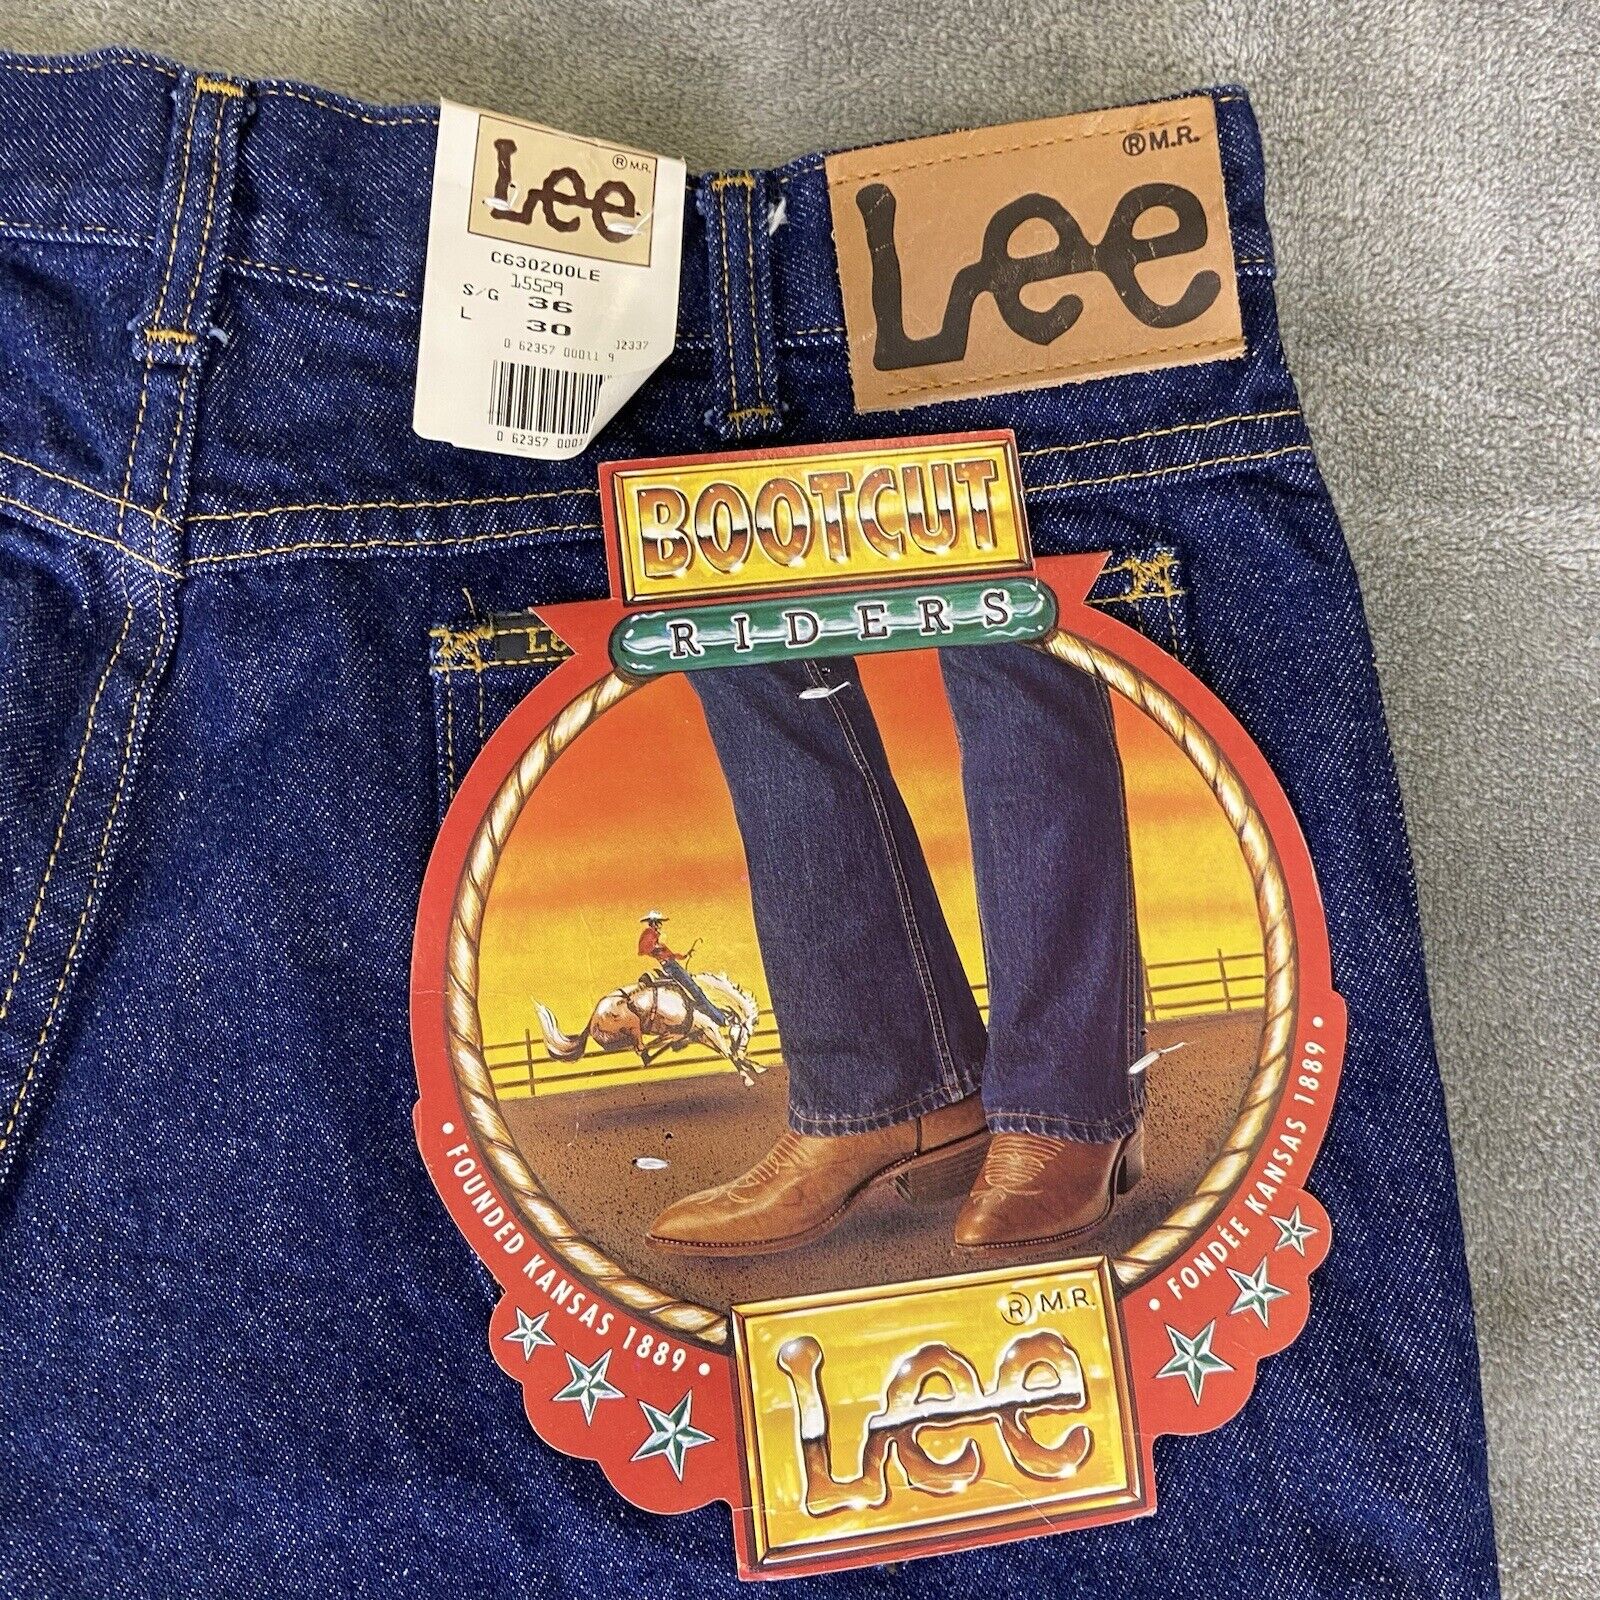 NOS Vintage LEE Riders Boot Cut Jeans size 36x30 Blue Cowboy Denim Canada READ